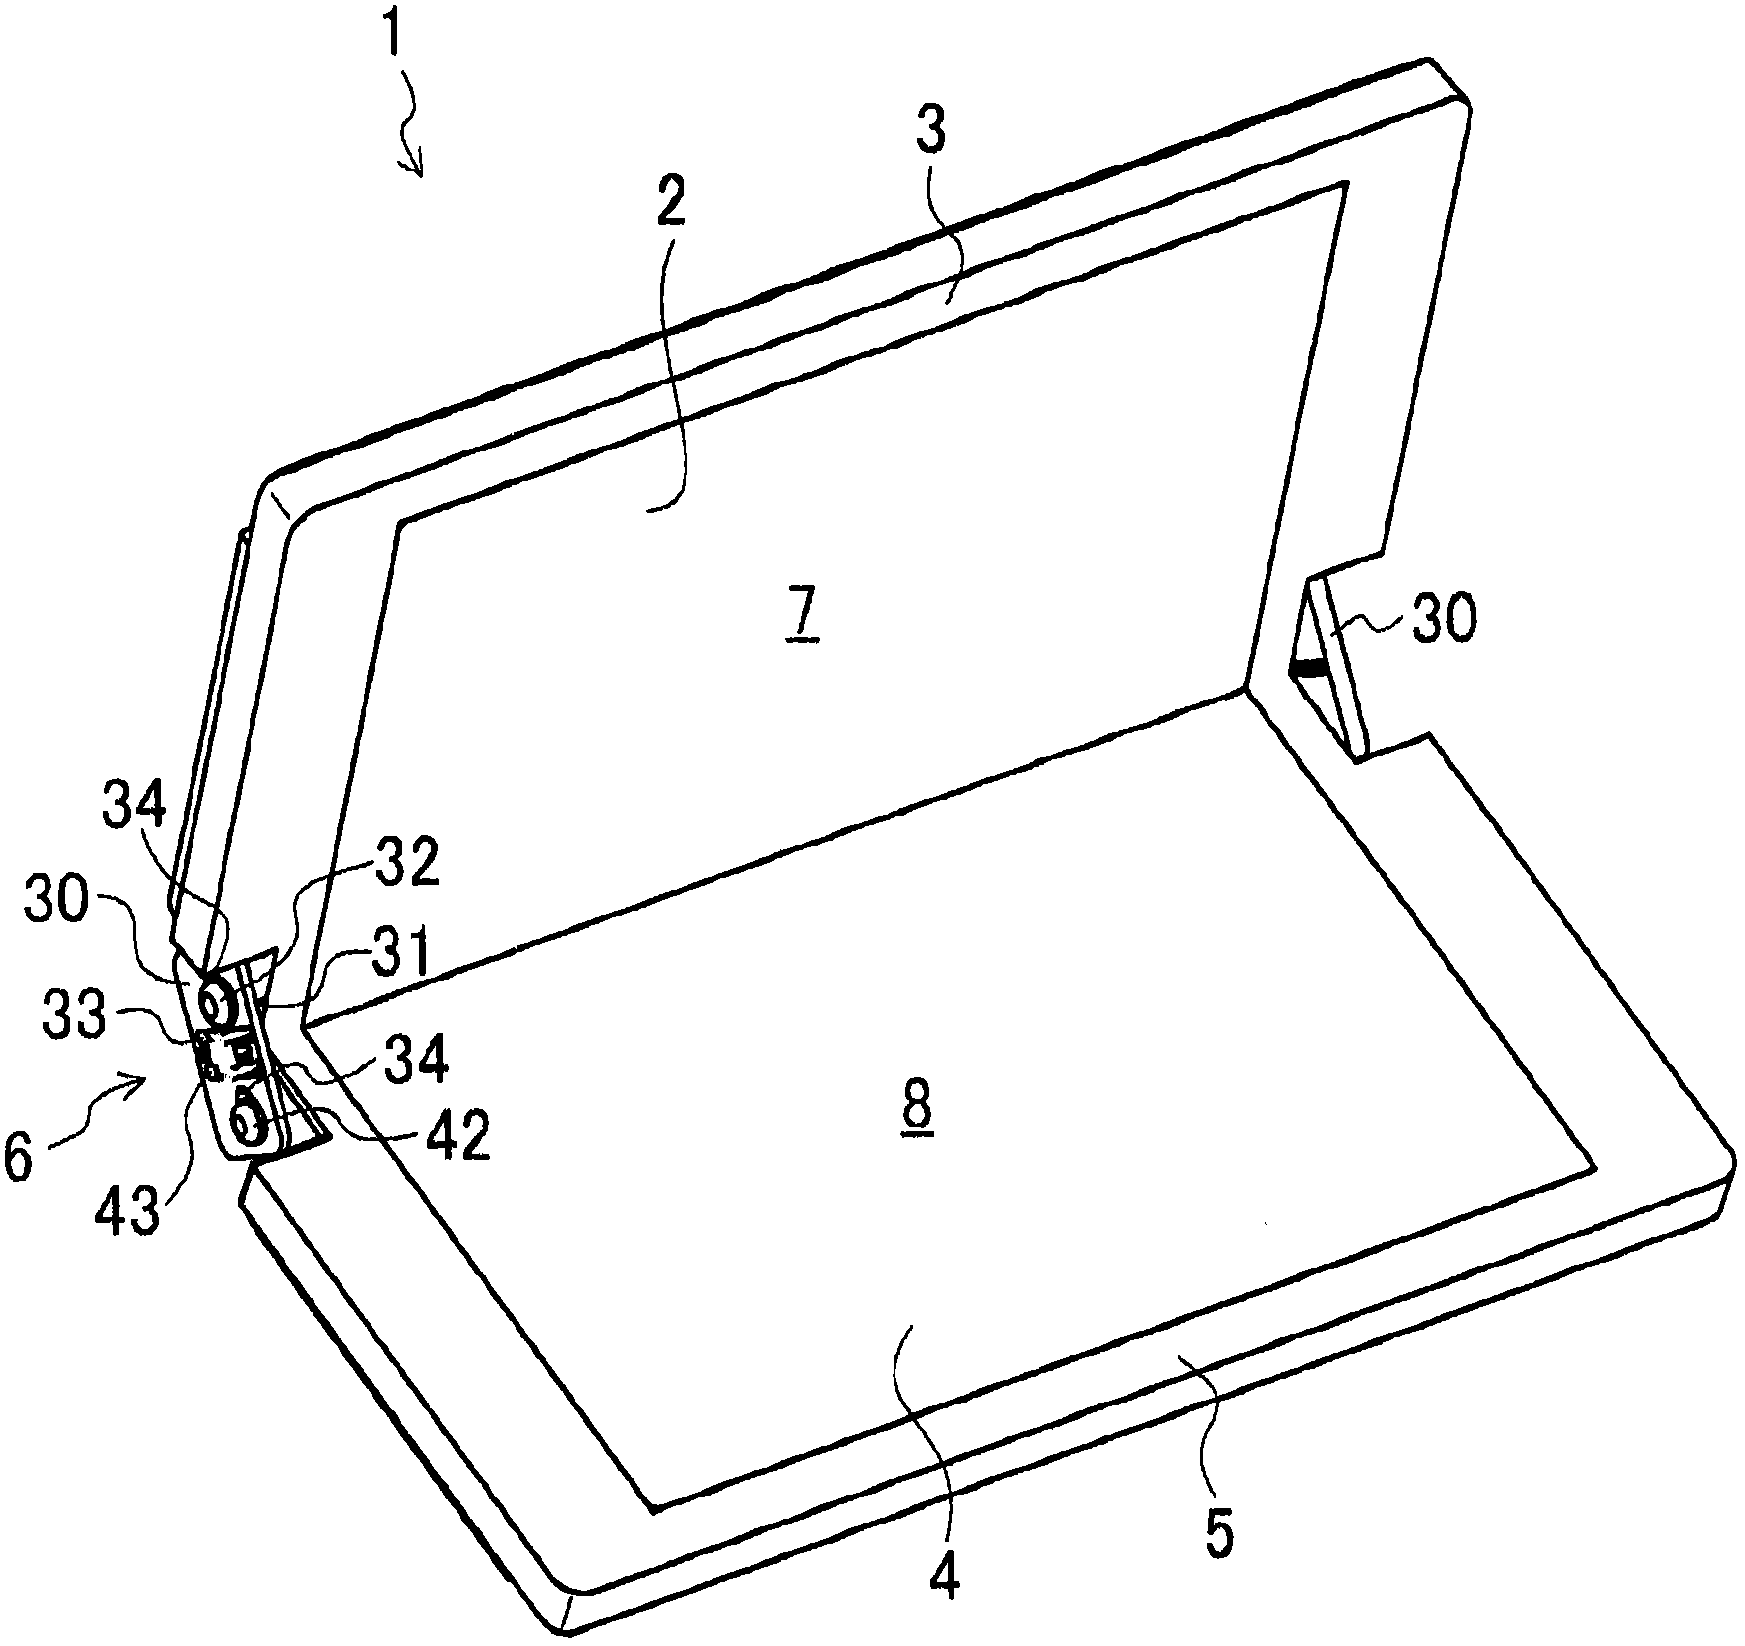 Folding portable terminal